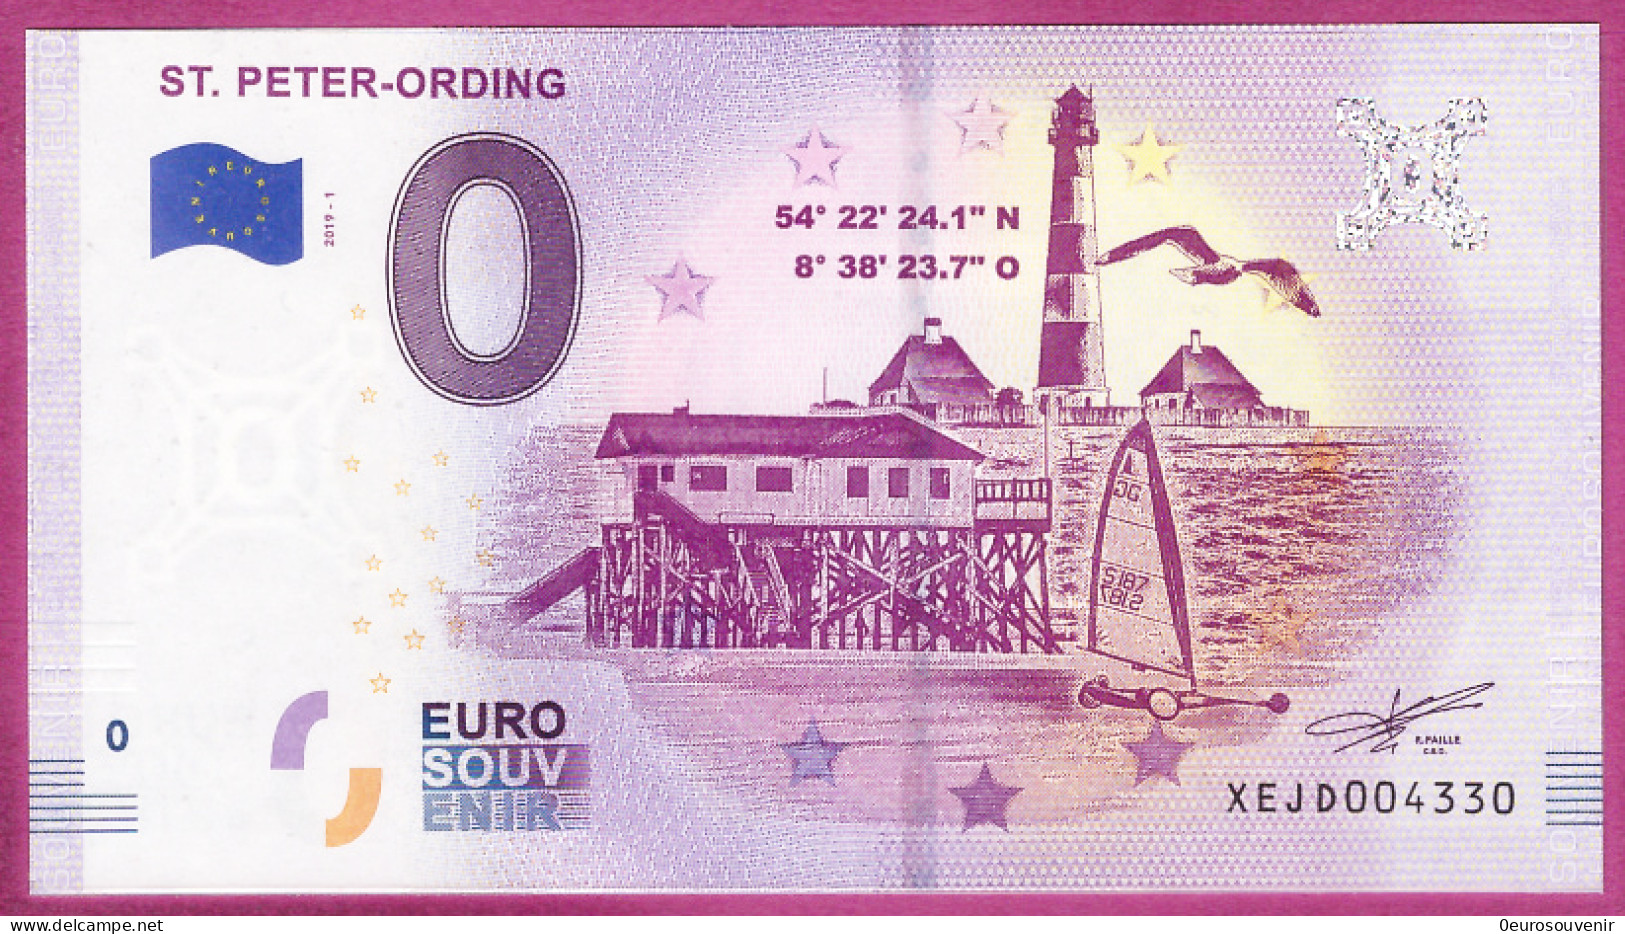 0-Euro XEJD 2019-1 ST. PETER-ORDING - LEUCHTTURM  HALLIG WESTERHEVERSAND - Privatentwürfe